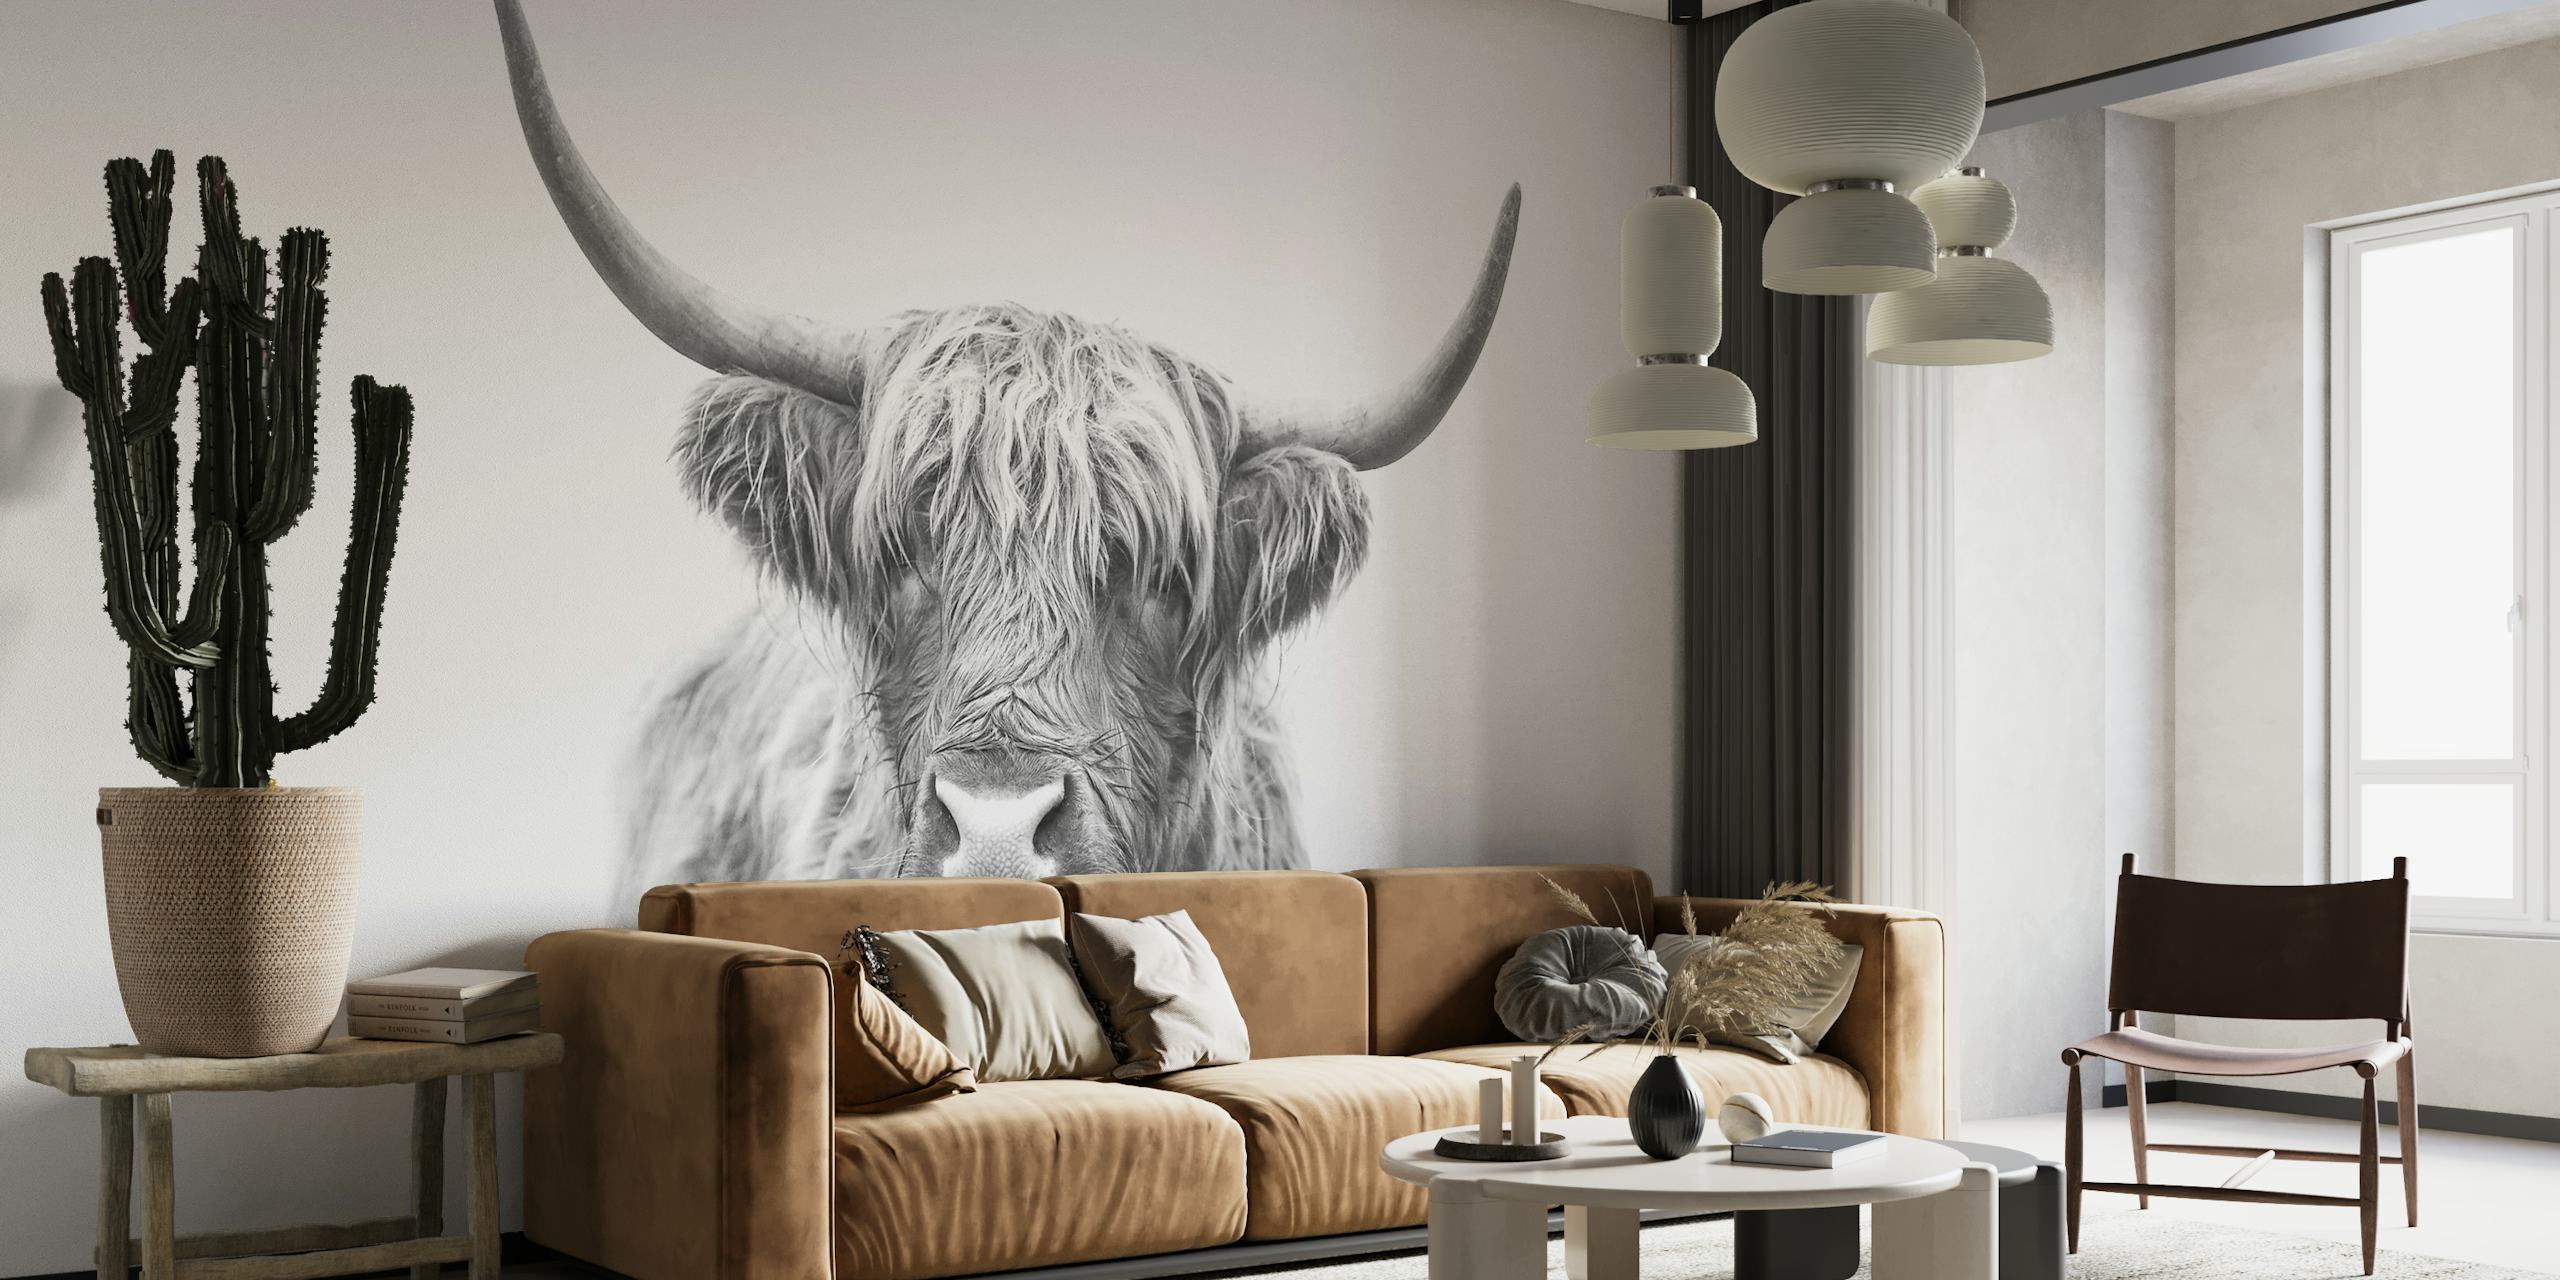 Monochrome Highland Bull wall mural artwork